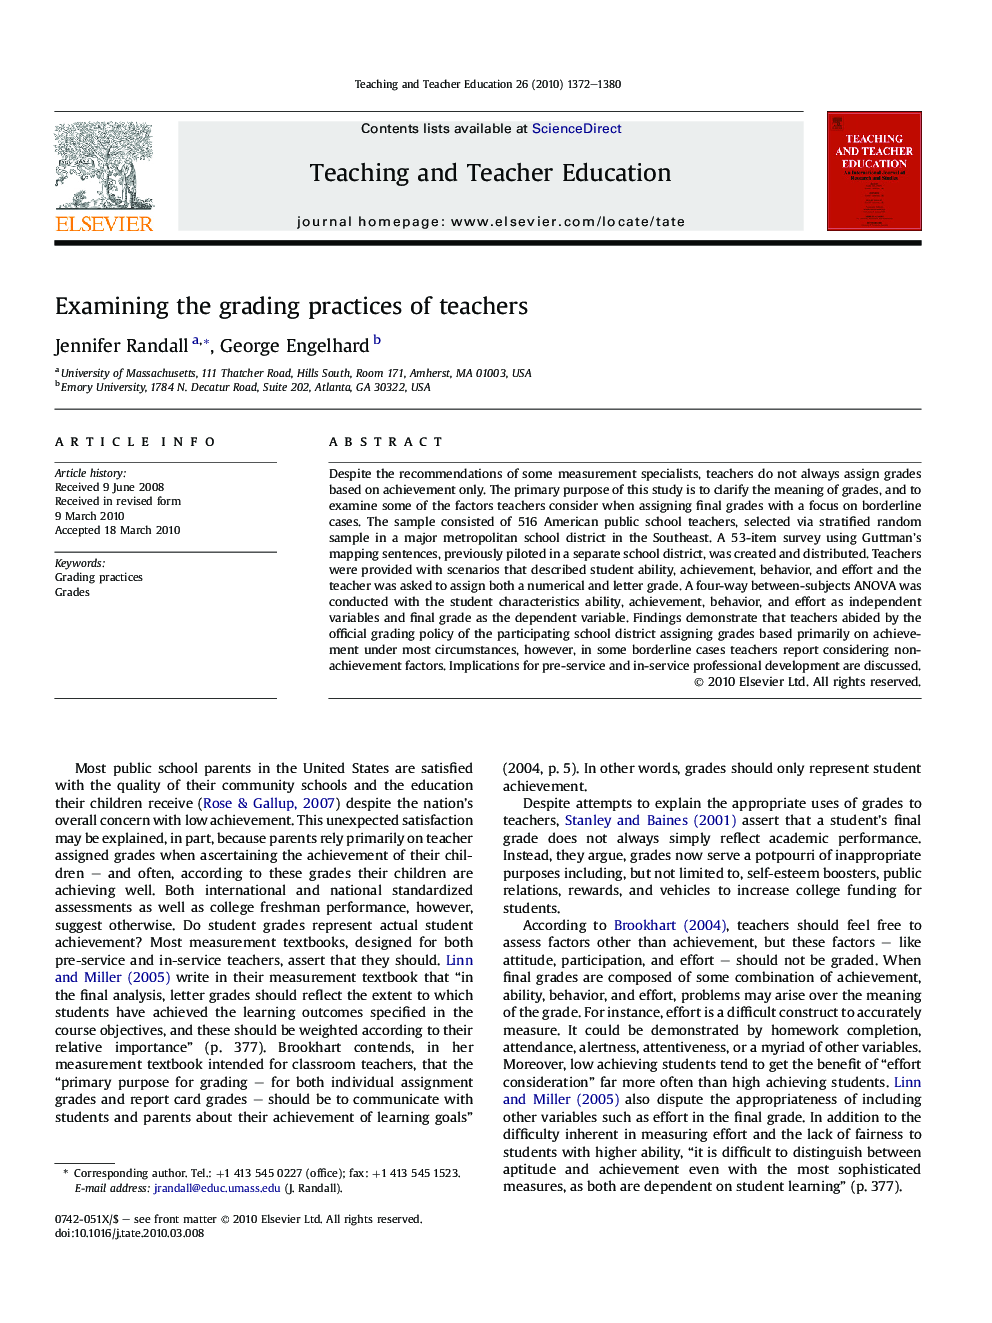 Examining the grading practices of teachers